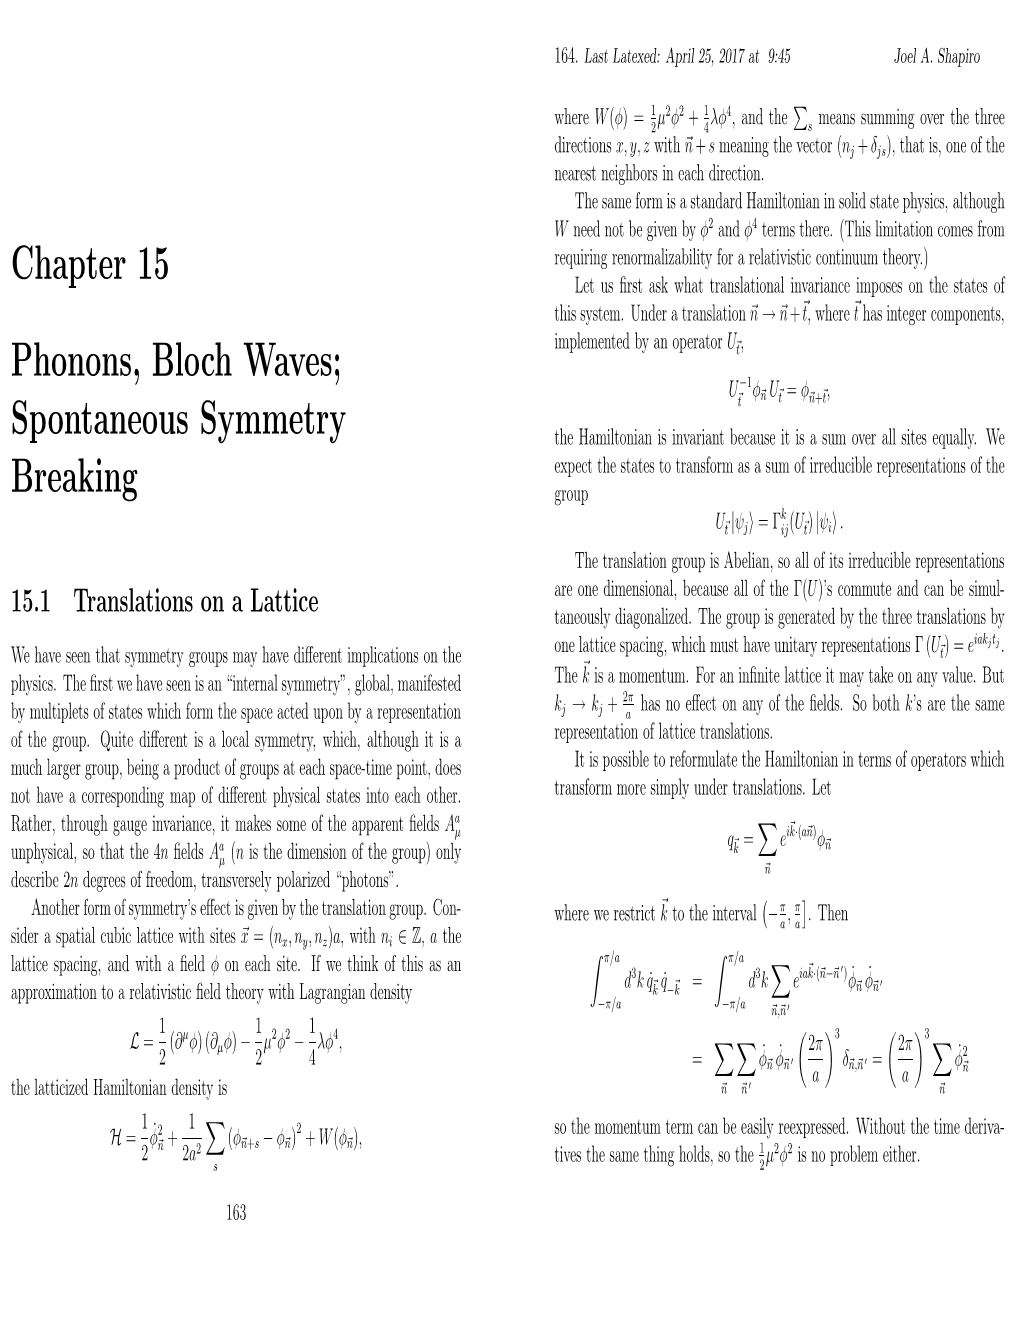 Chapter 15 Phonons, Bloch Waves; Spontaneous Symmetry Breaking